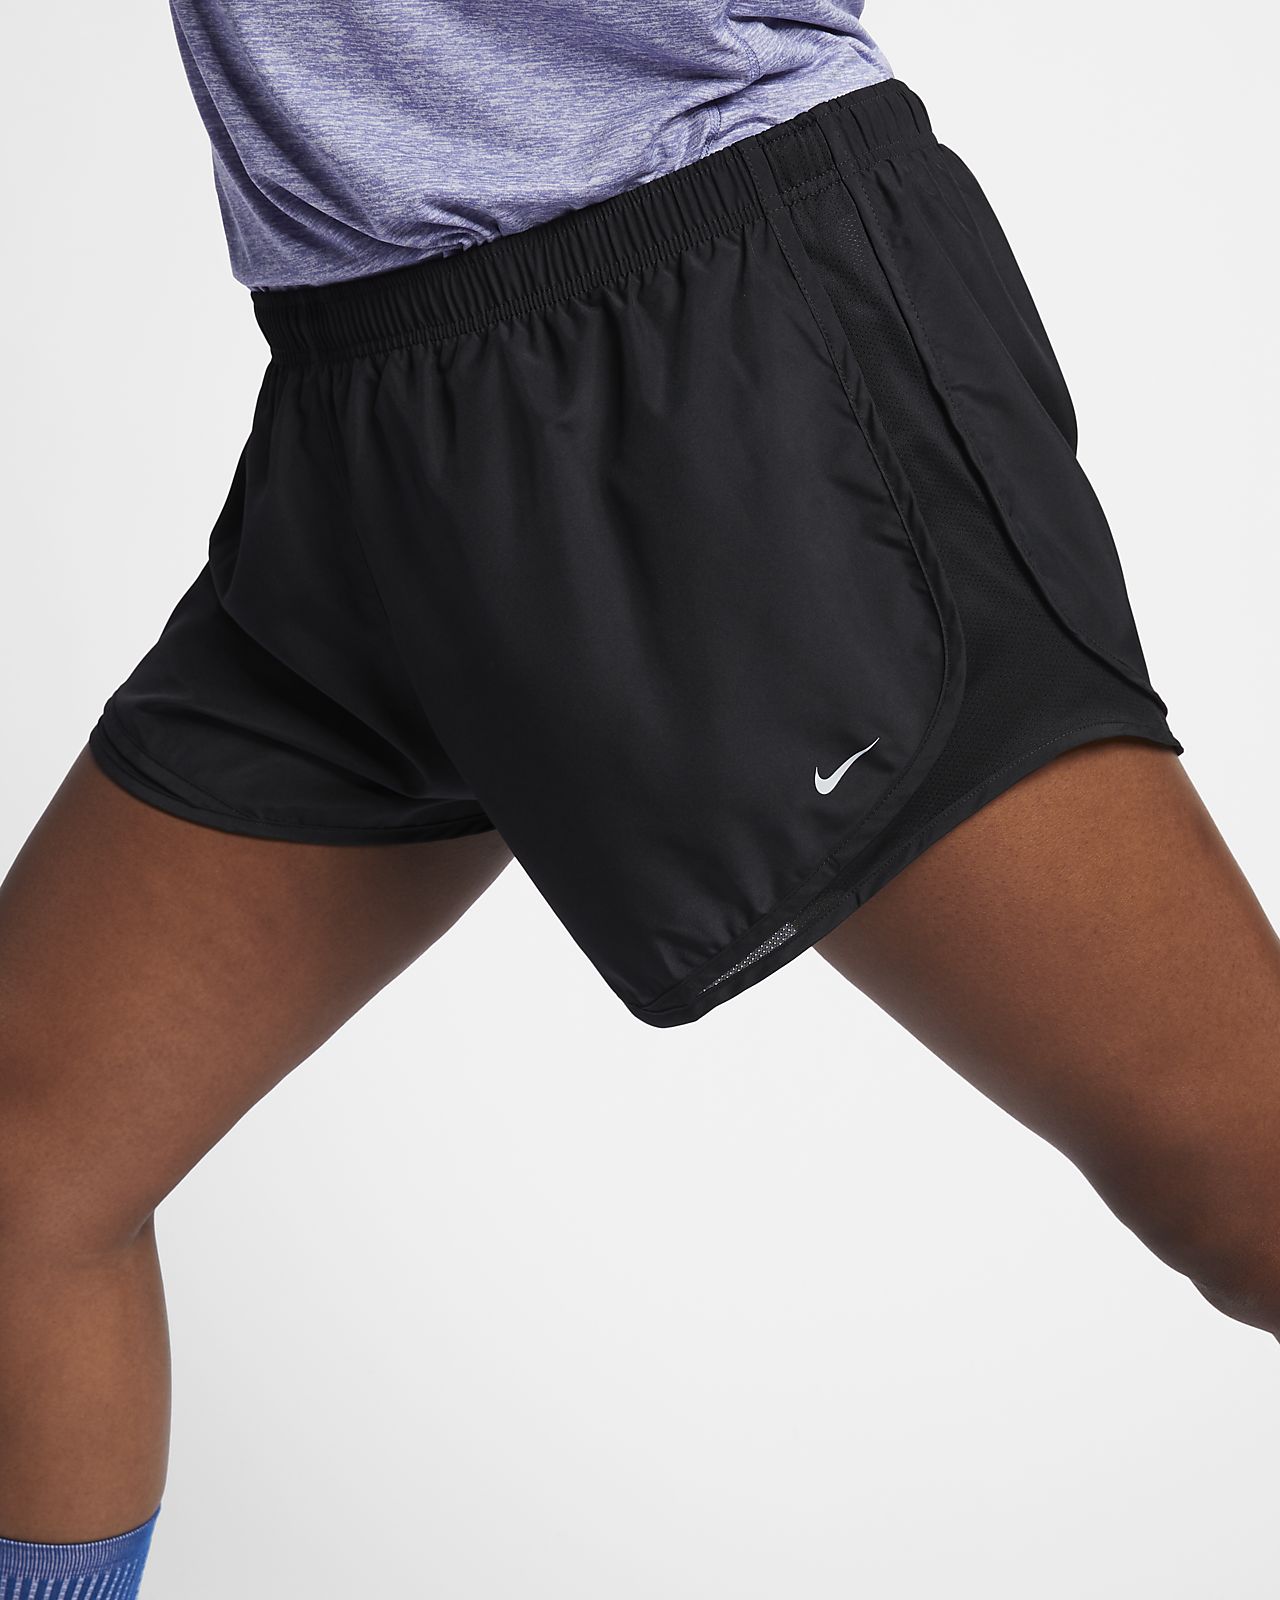 Download Nike Tempo (Plus Size) Women's 3" Running Shorts. Nike.com